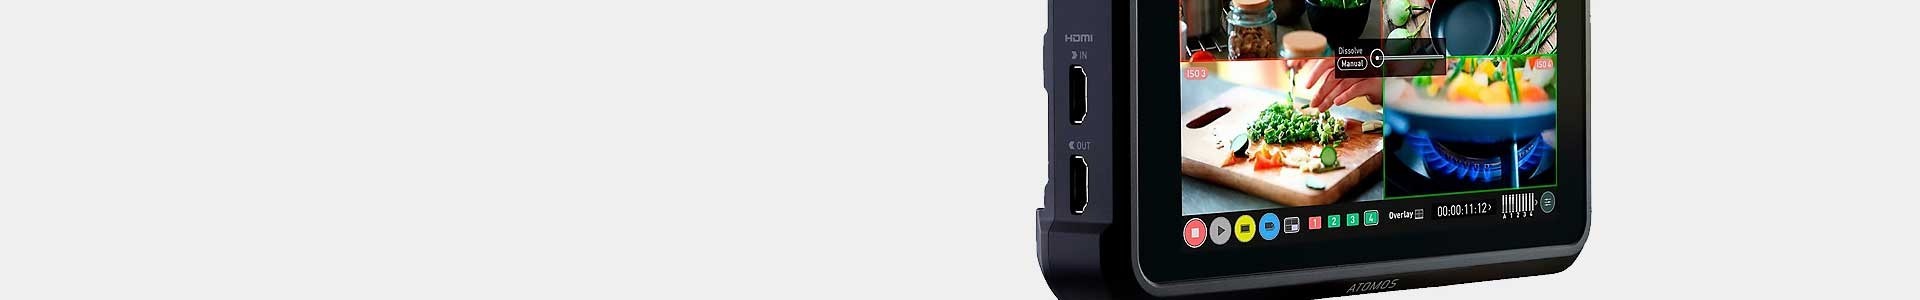 Atomos - Monitors-recorders for professional cameras - Avacab